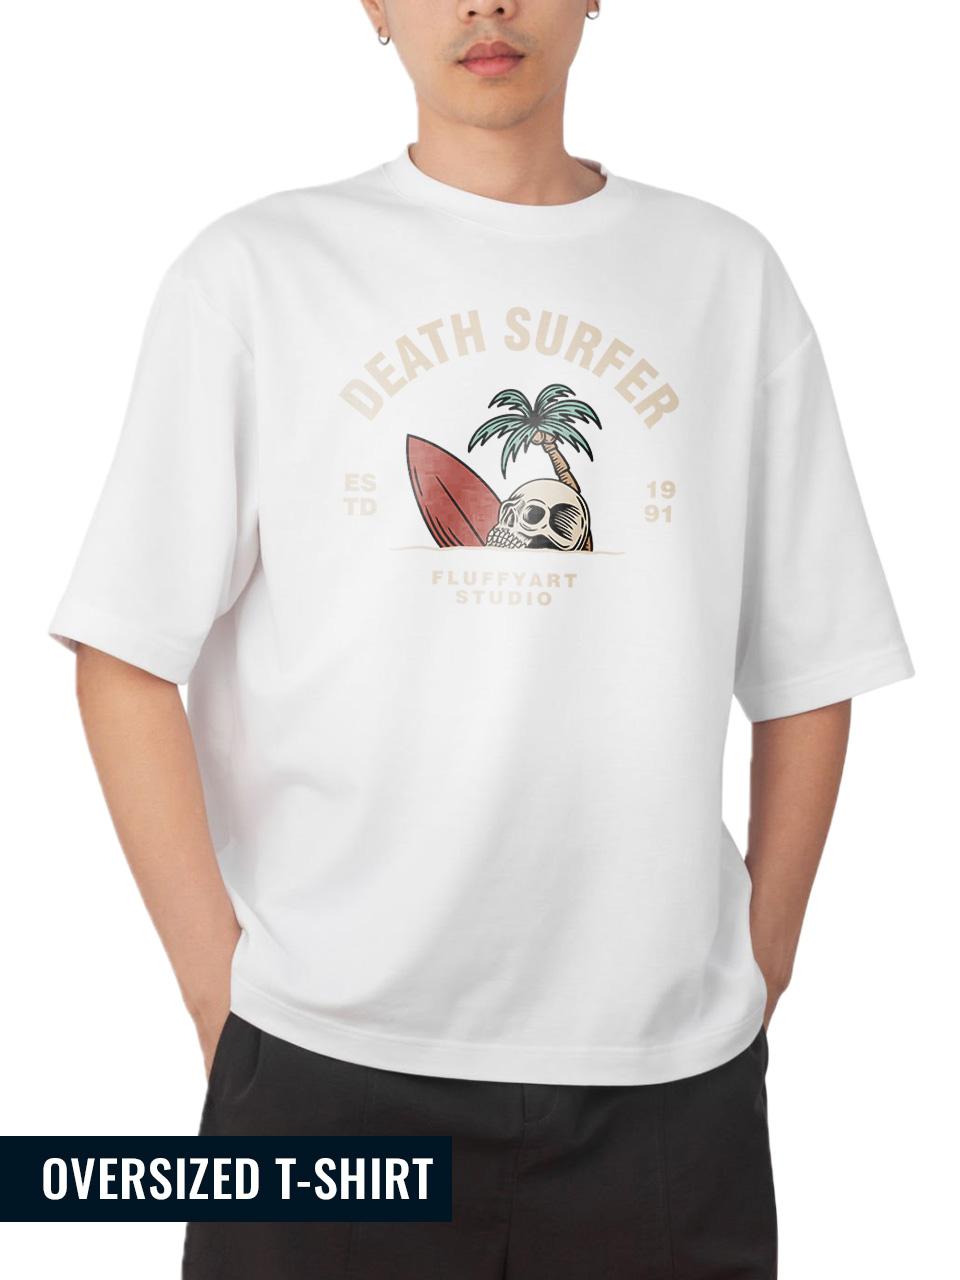 Death Surfer Saga Oversized T-Shirt